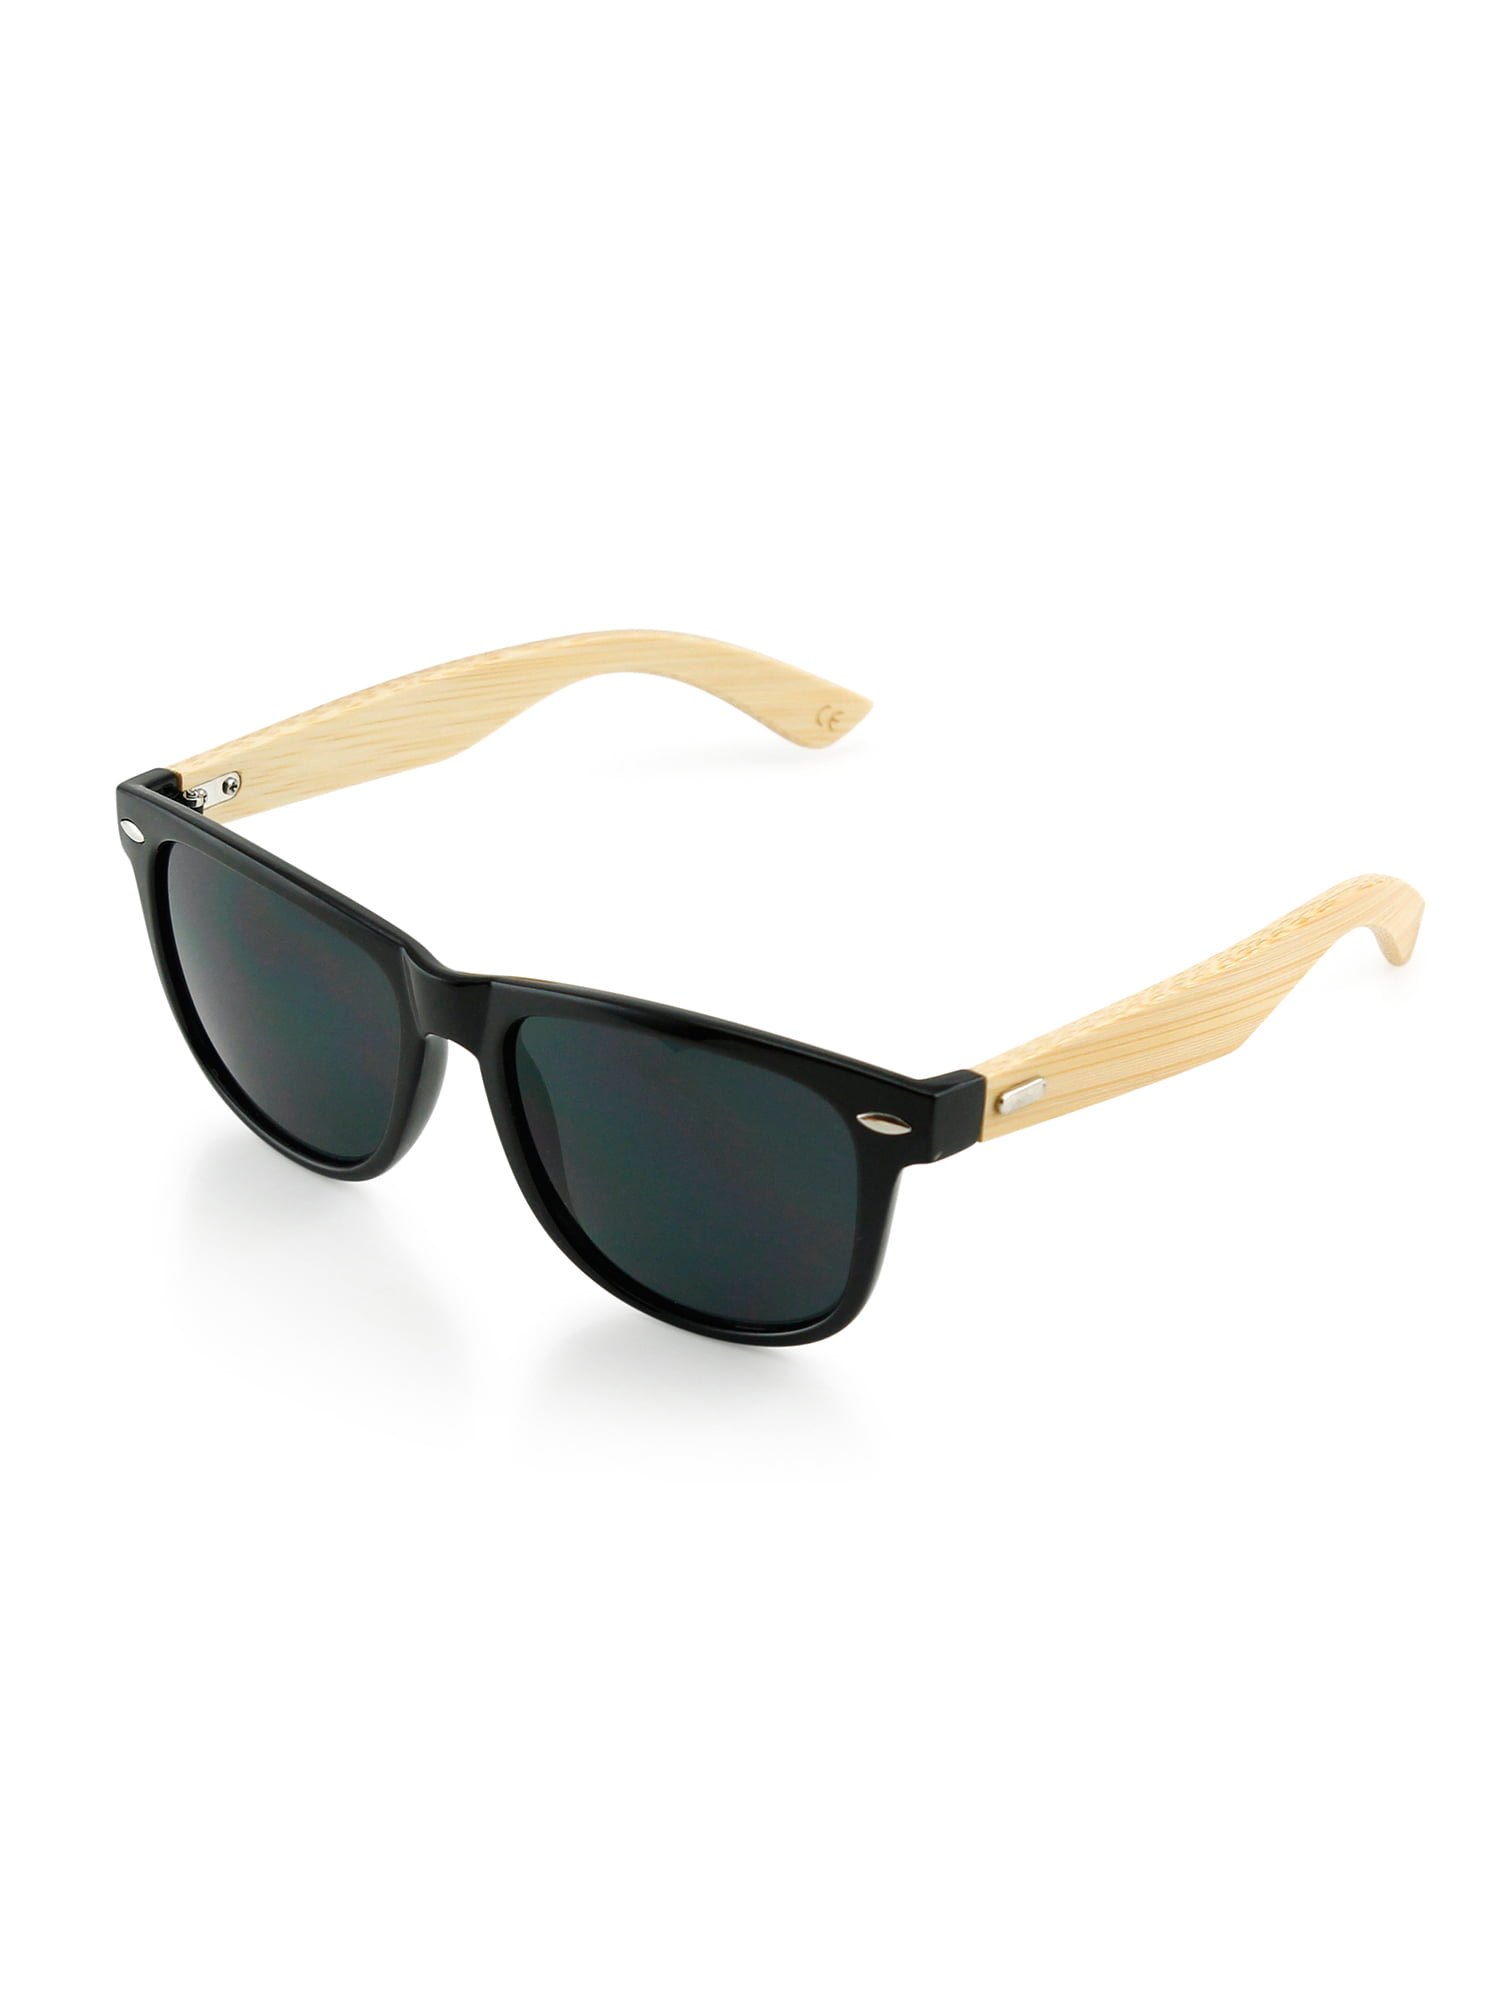 SUERTREE Fashion Bamboo Sunglasses Women Men Ladies Vintage Sun Glasses JH8001-8004 